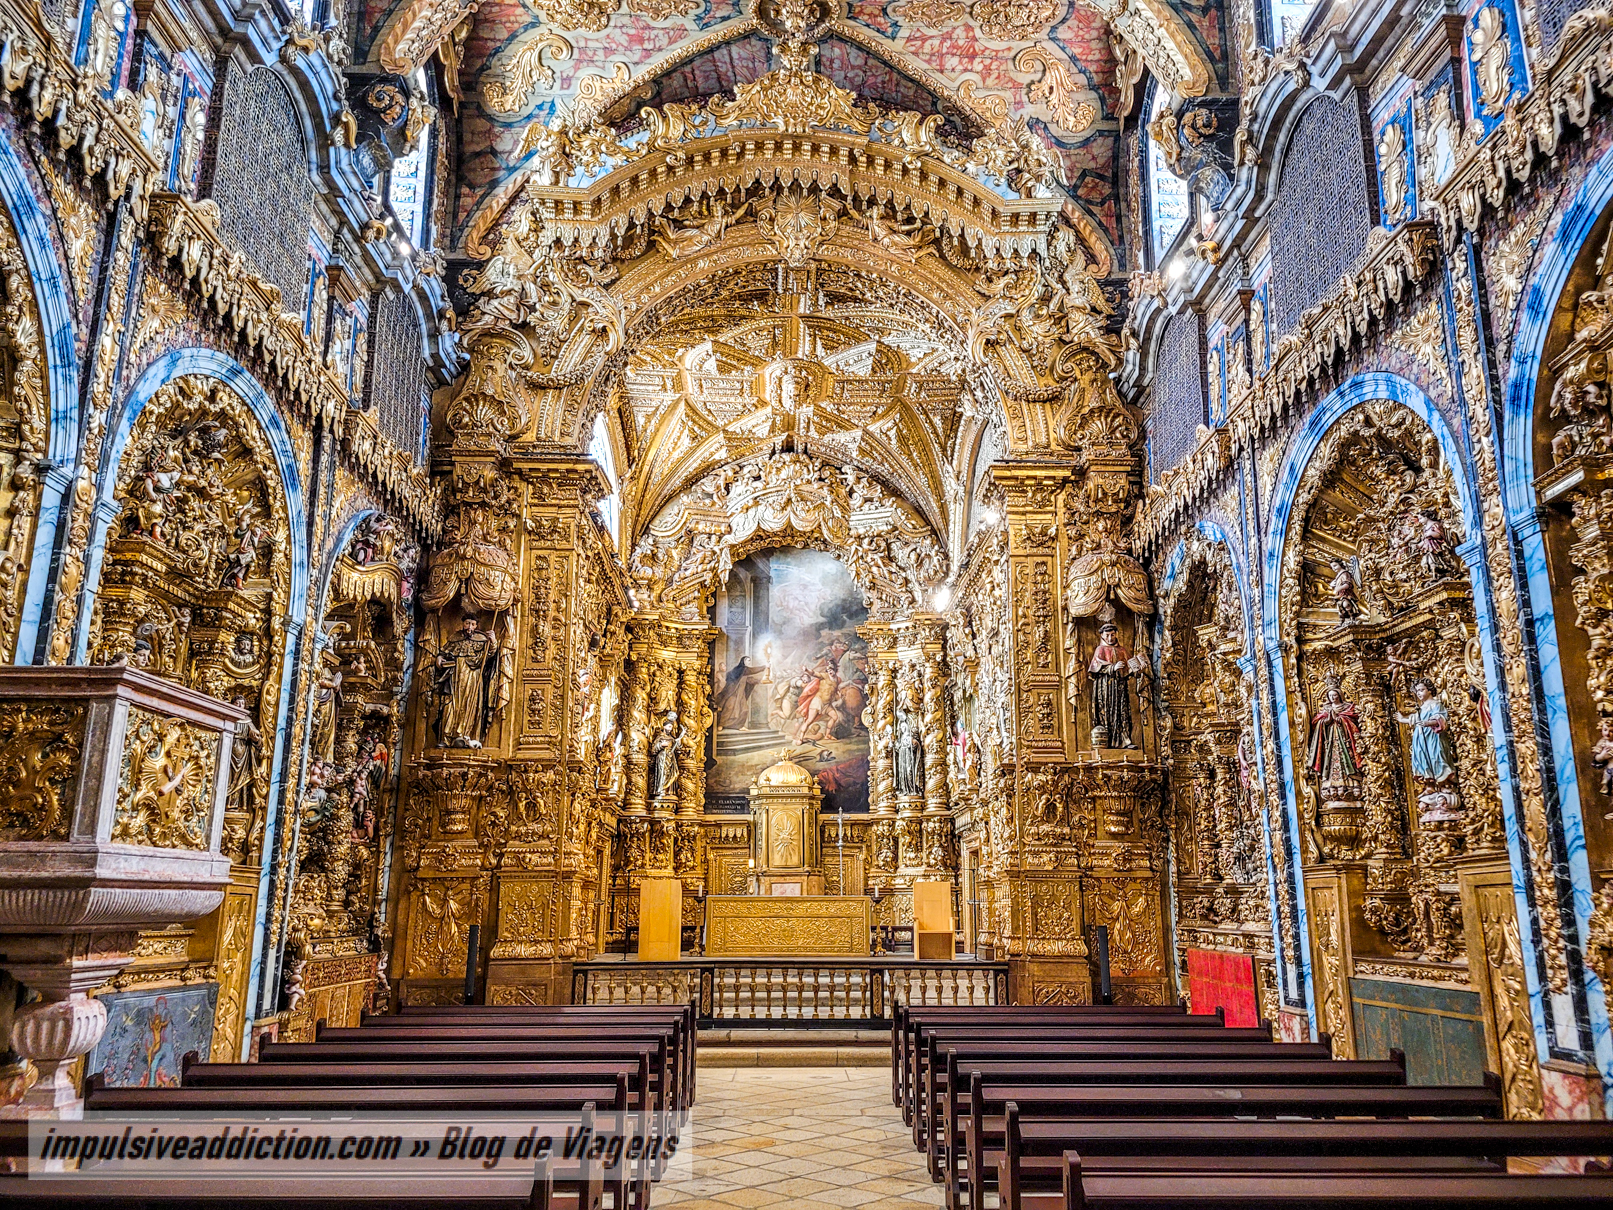 Visitar a Igreja de Santa Clara - Porto | O que visitar